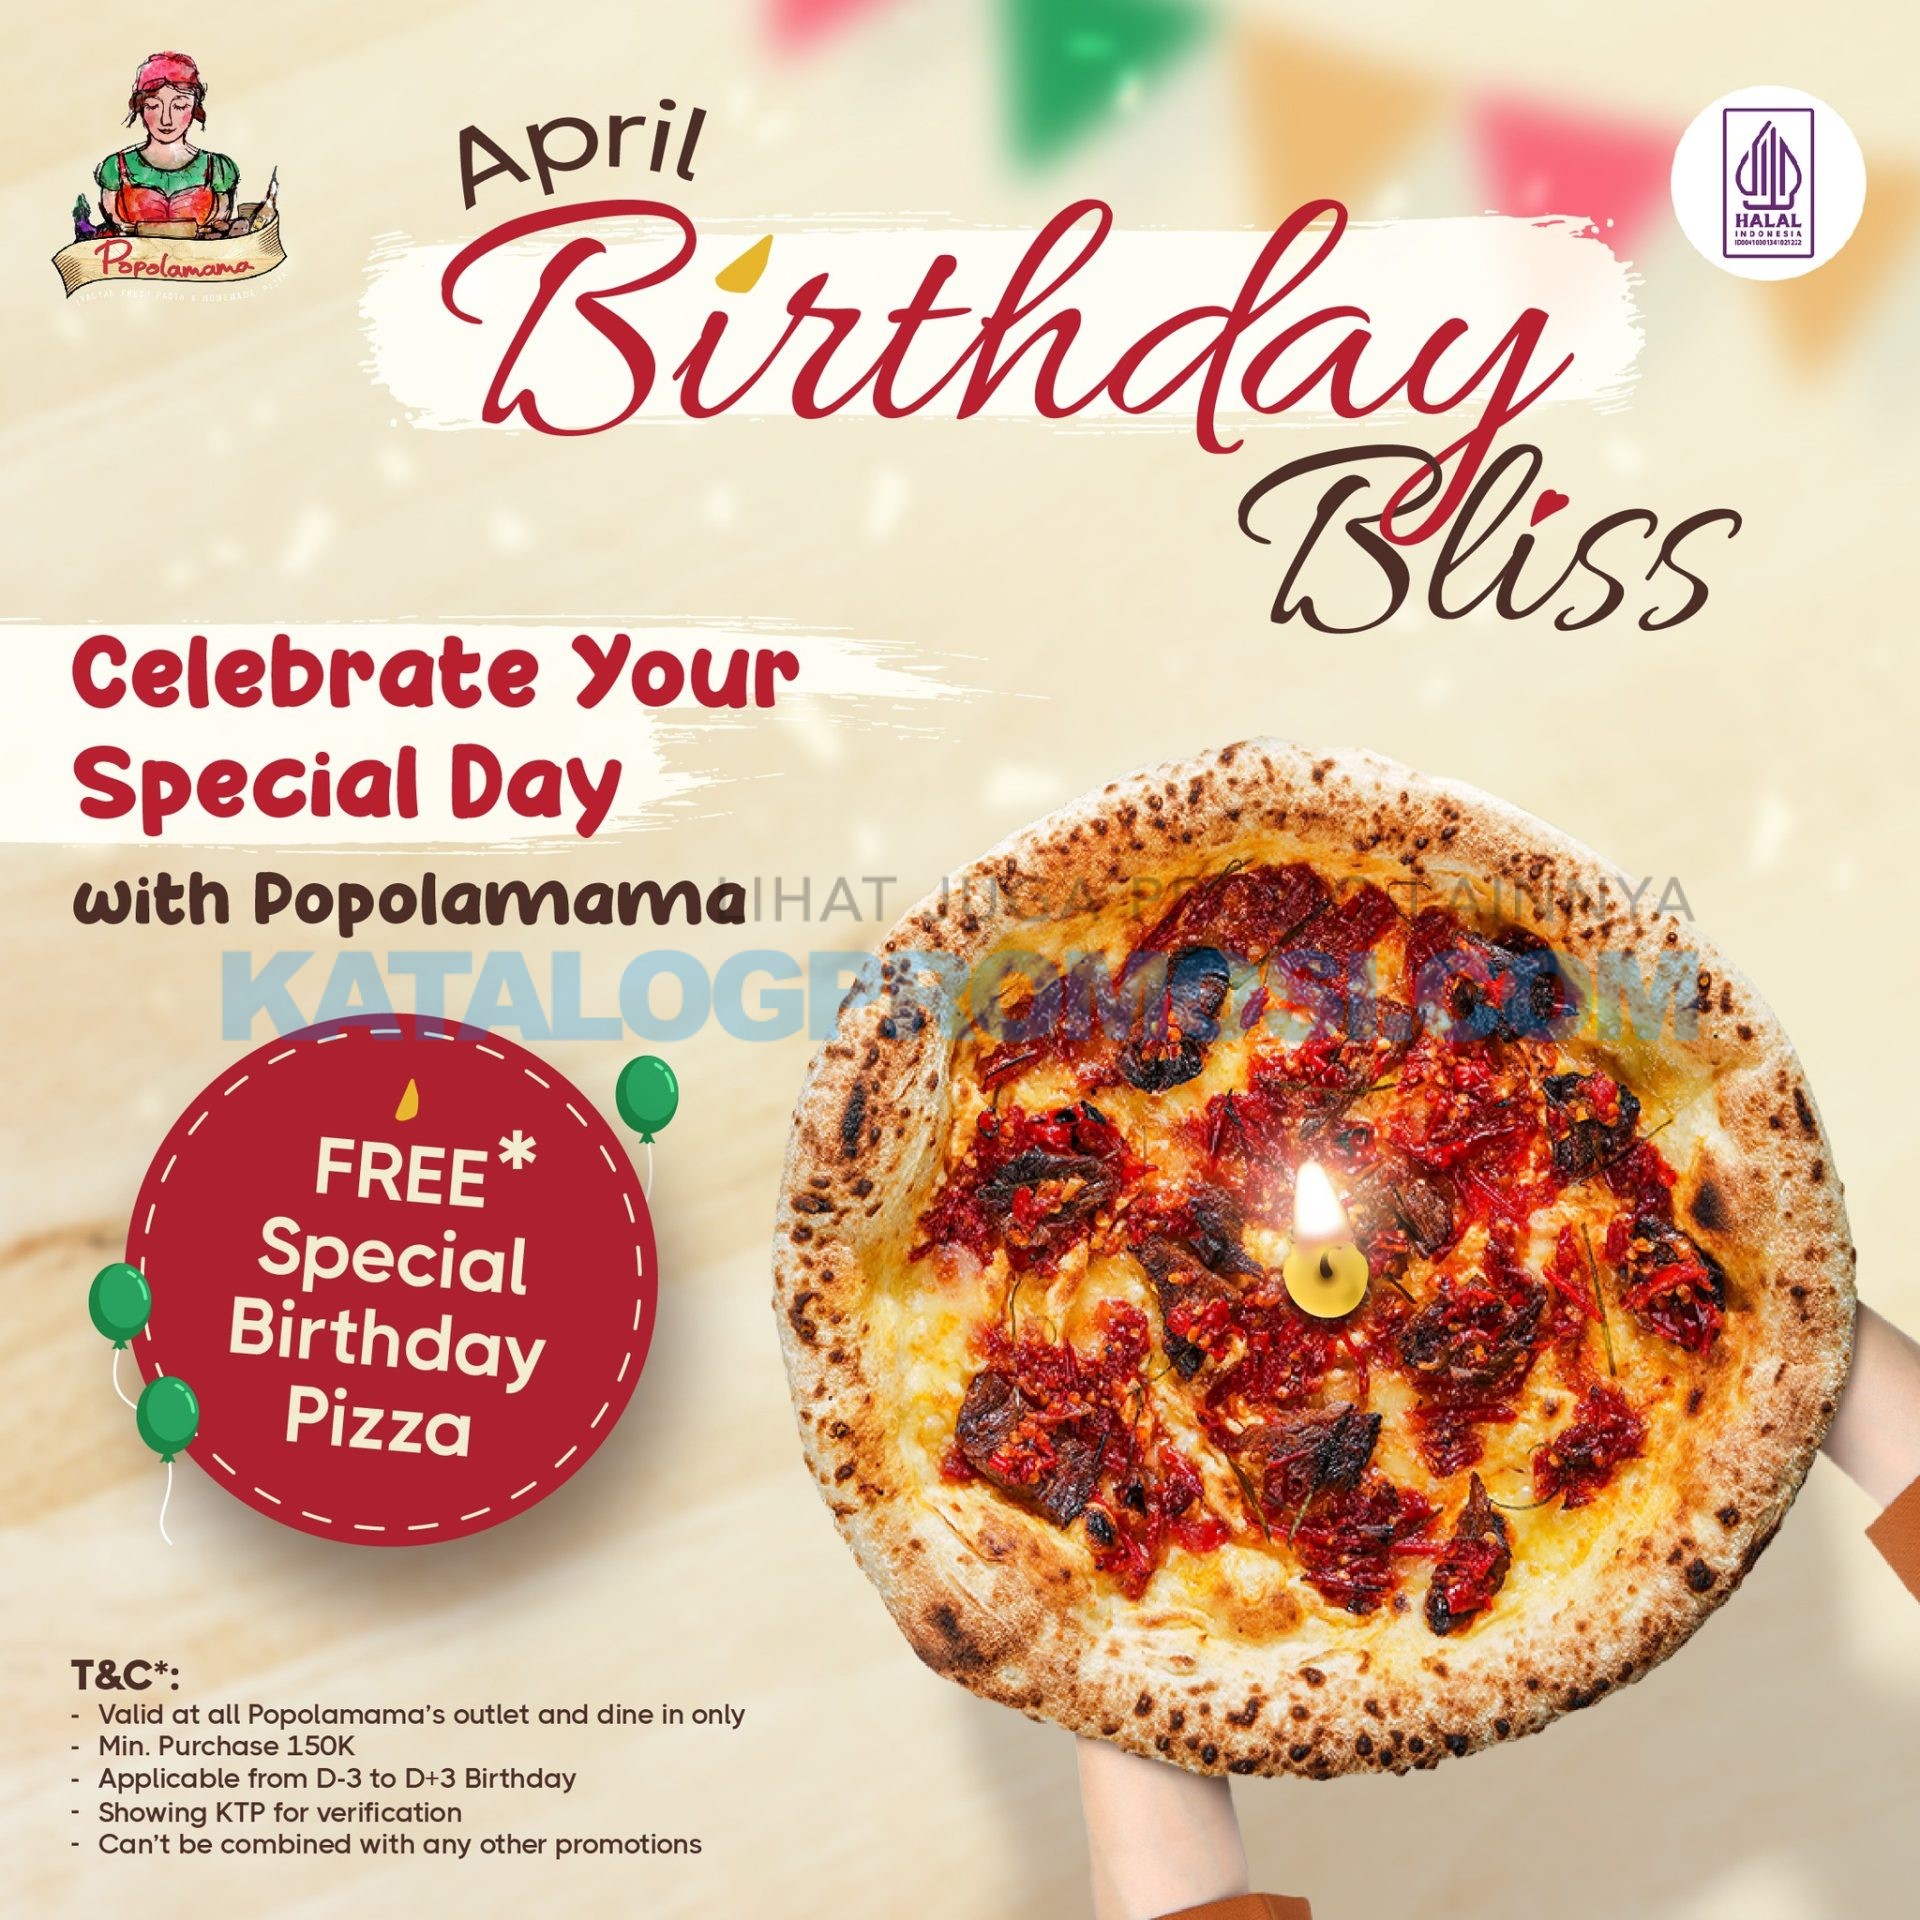 PROMO POPOLAMAMA APRIL BIRTHDAY BLISS - FREE Special Birthday Pizza!